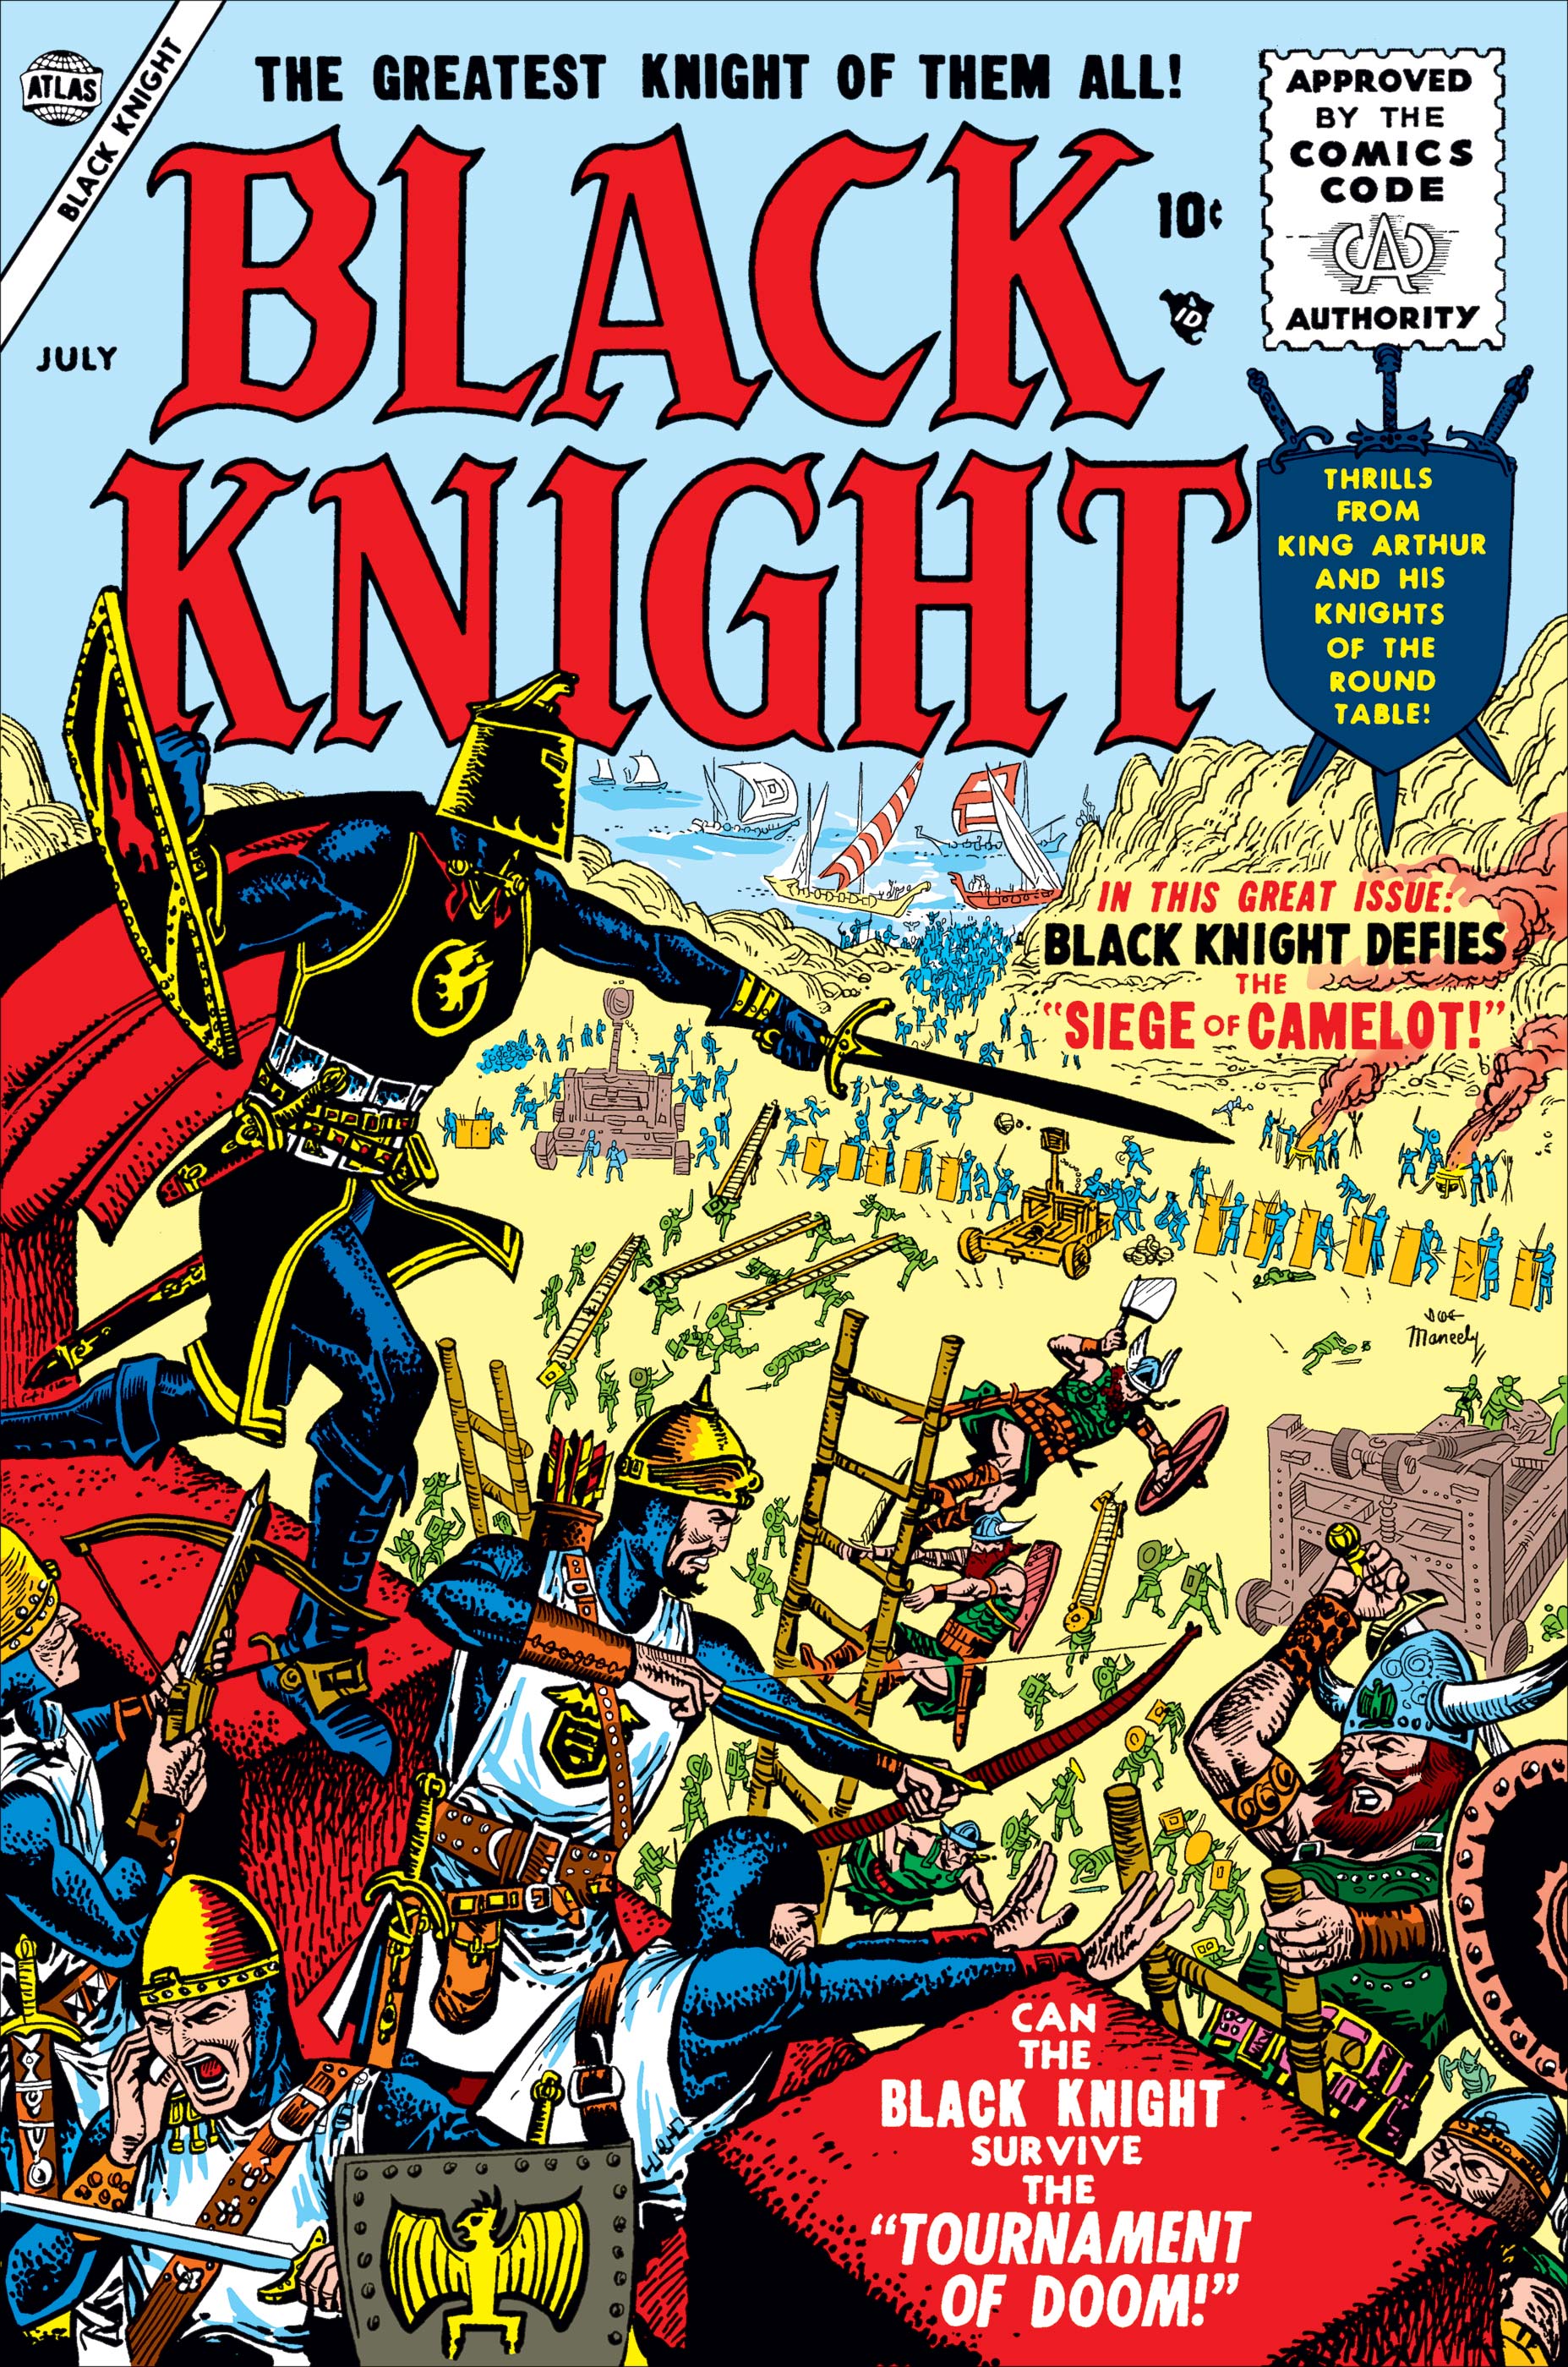 Black Knight (1955) #2